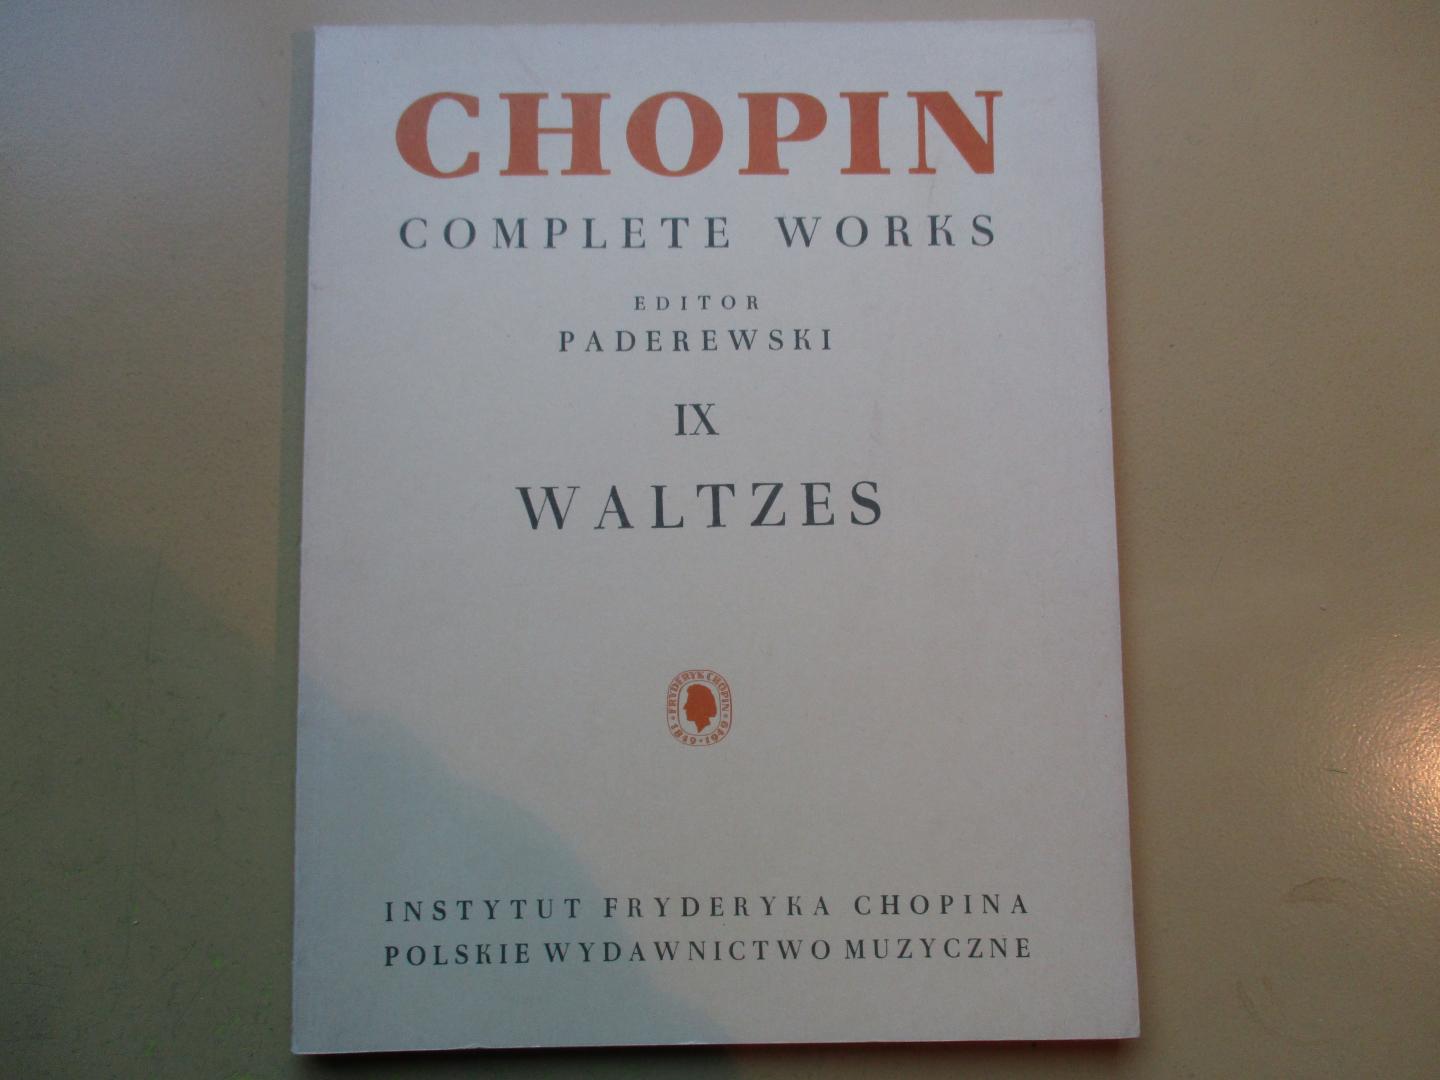 Paderewski, I. J. (editor) - Fryderyk Chopin Complete Works  IX waltzes for piano